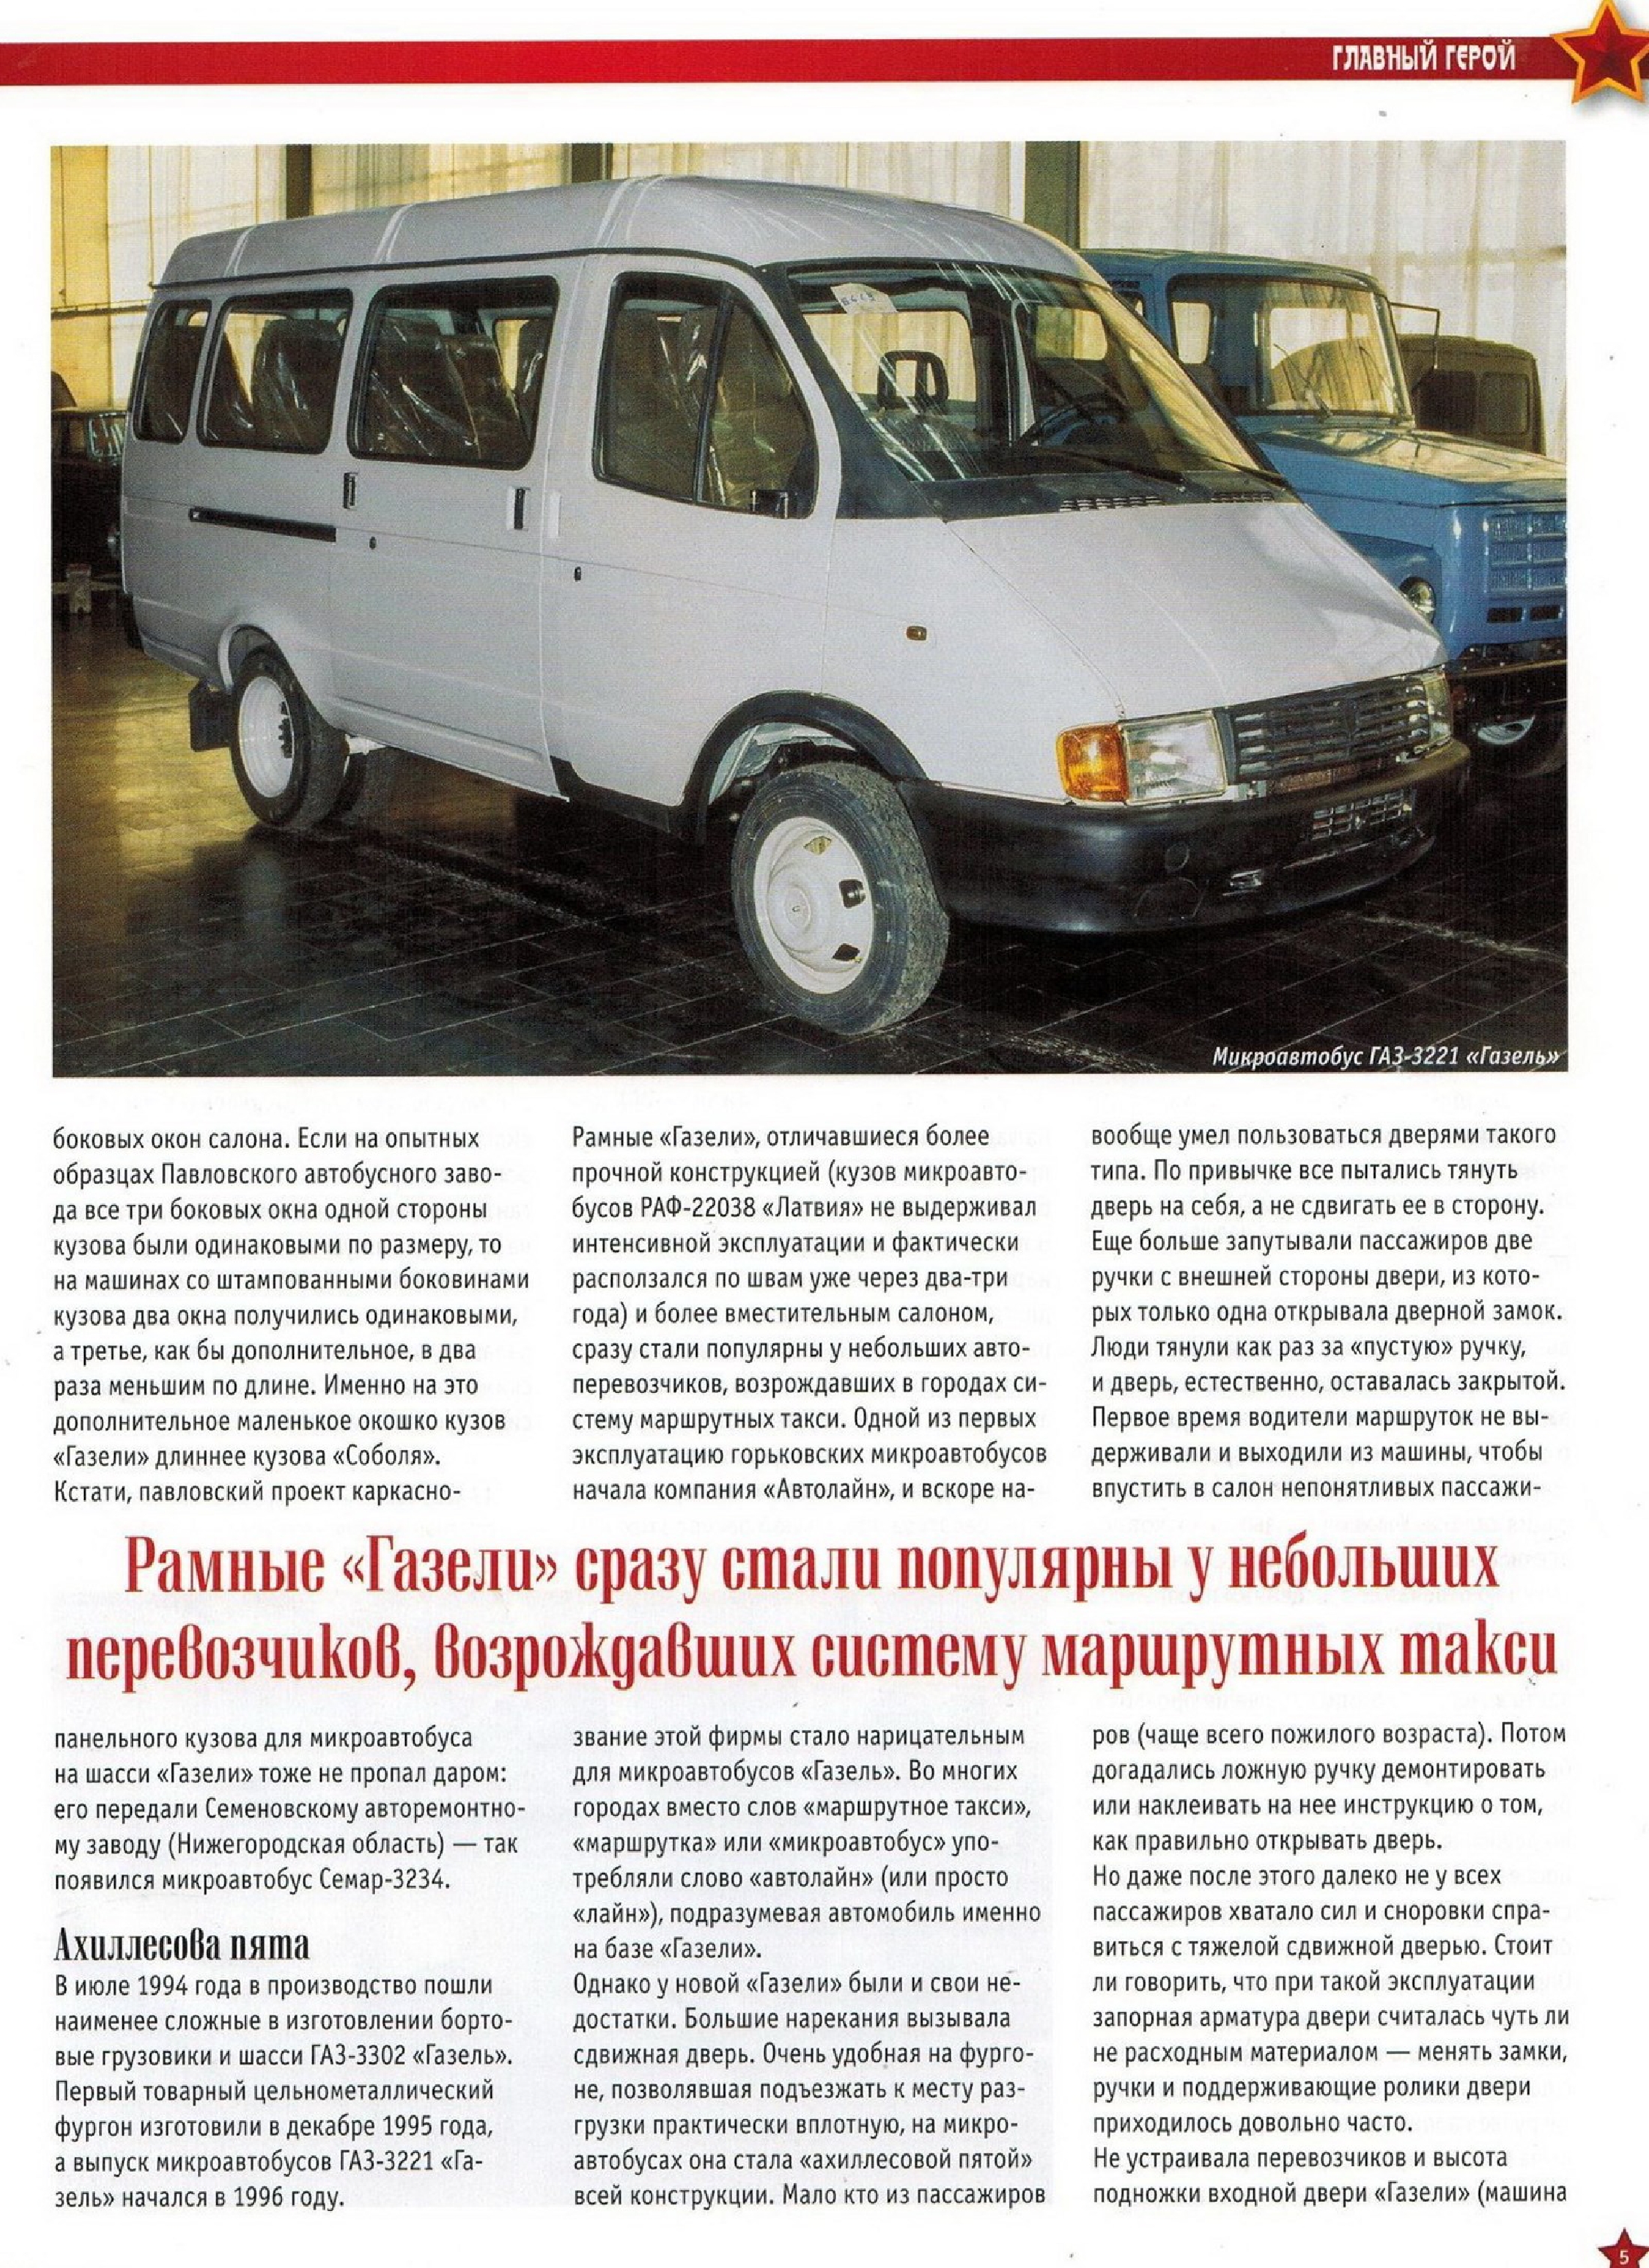 Automobile legend CCCP 194 GAZ 3221 Gazelle.pdf